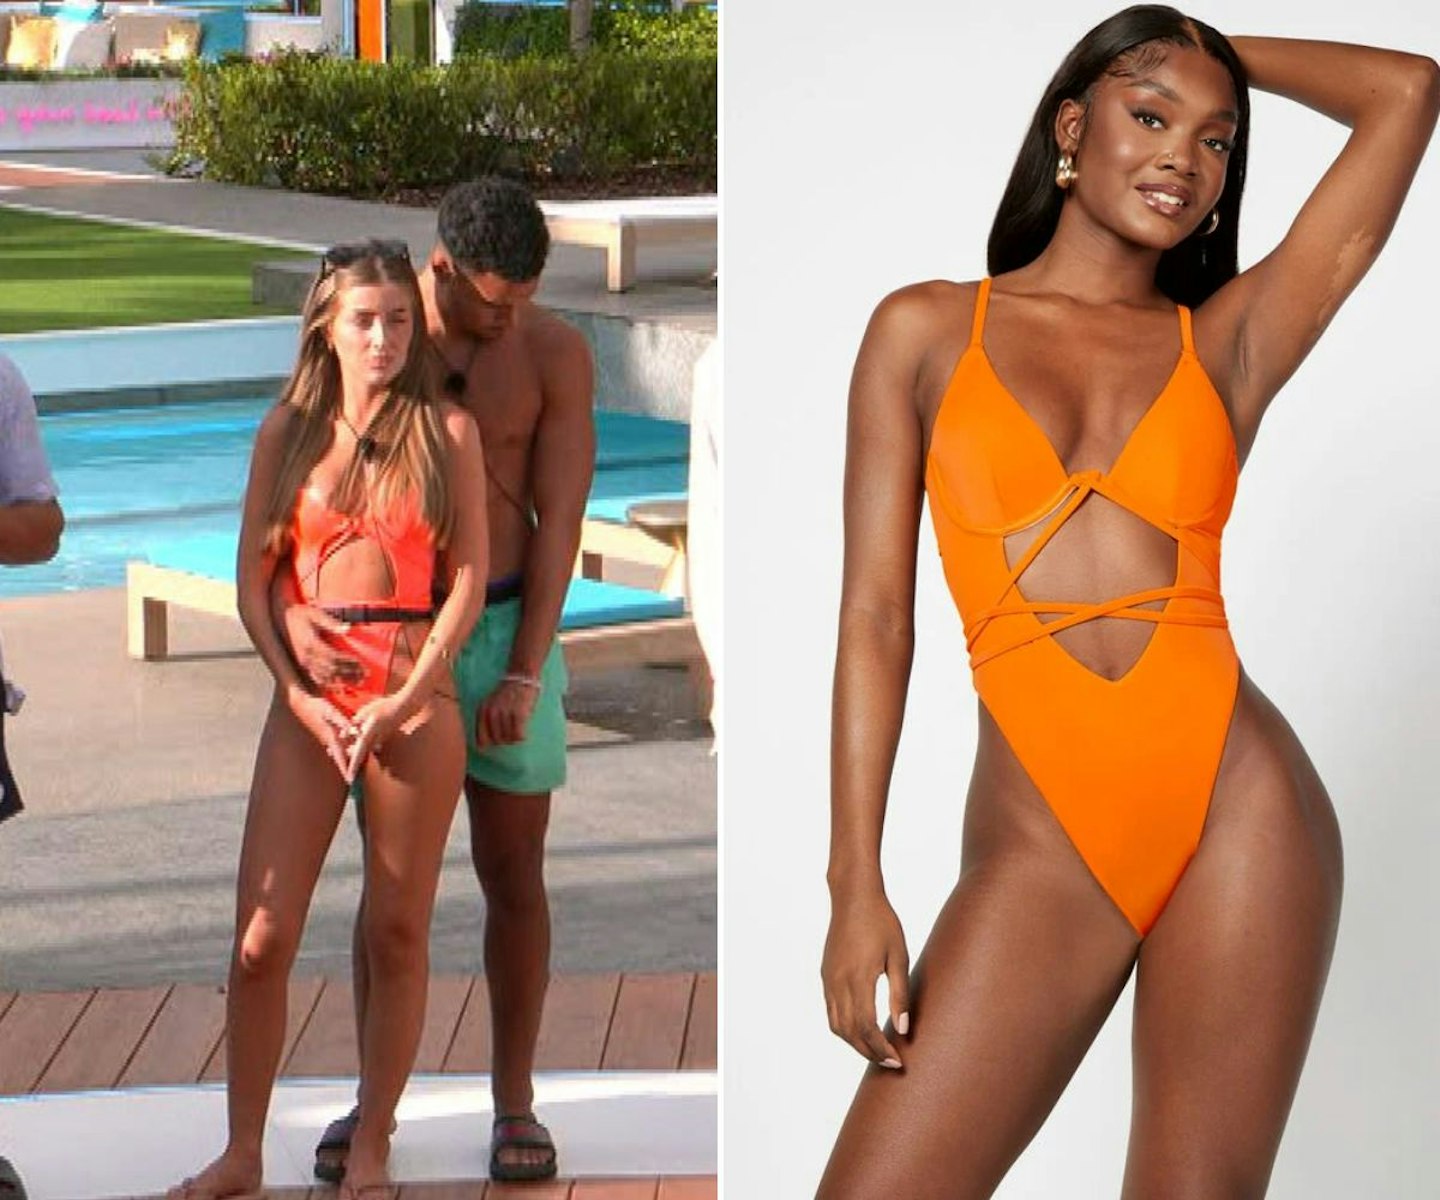 Georgia Steel's orange cut-out swimsuit